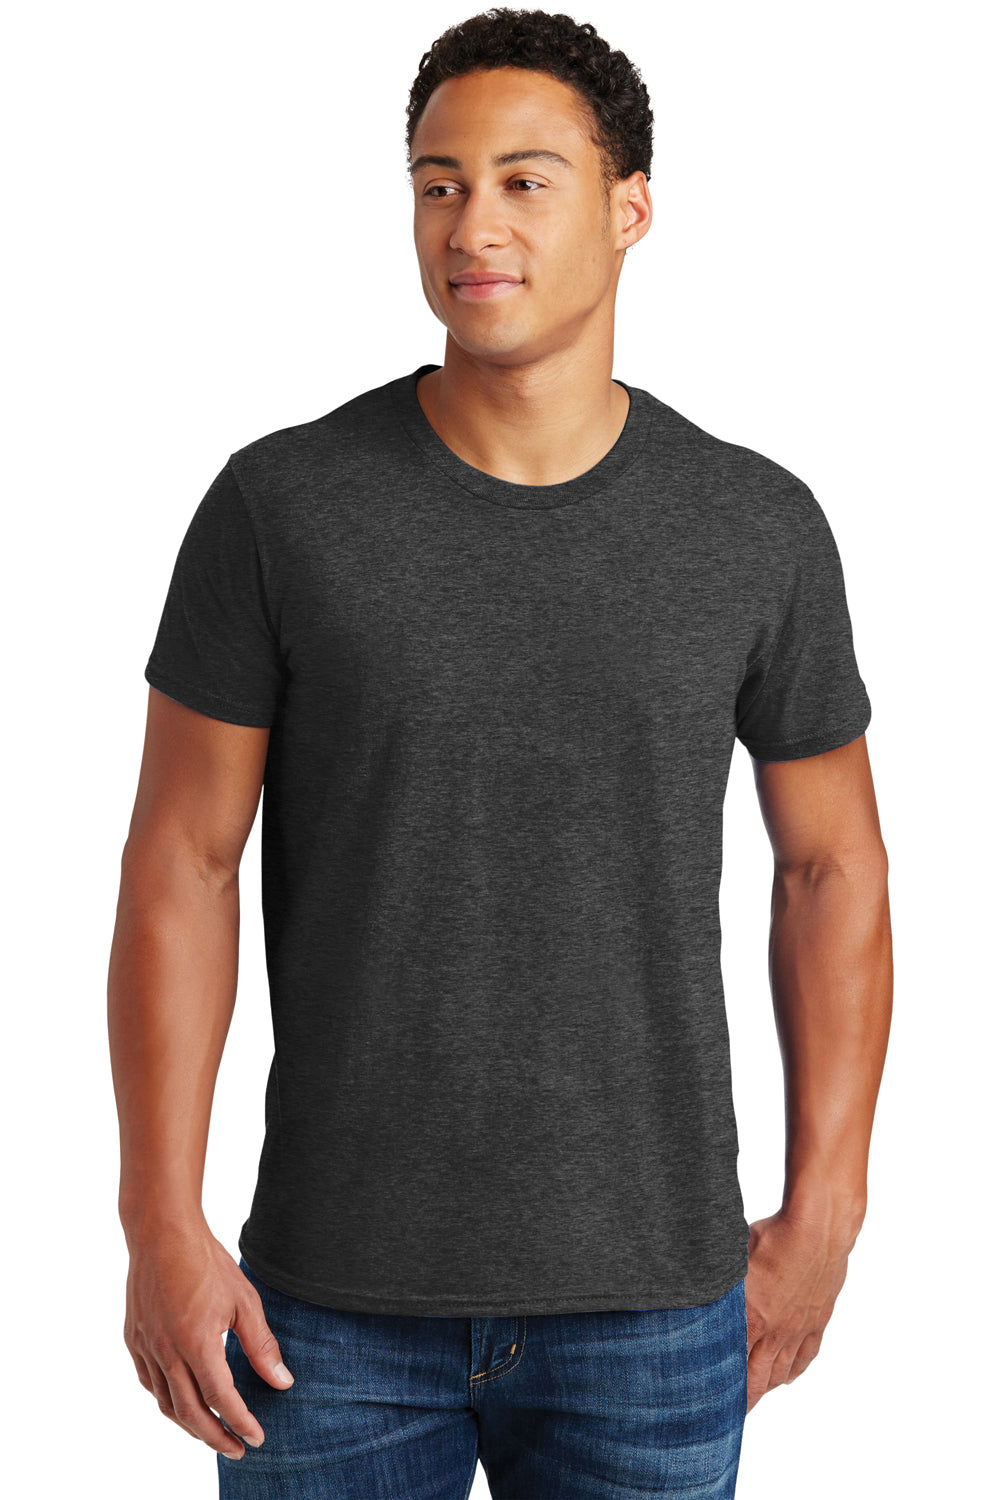 Hanes 4980 Mens Nano-T Short Sleeve Crewneck T-Shirt Heather Charcoal Grey Front